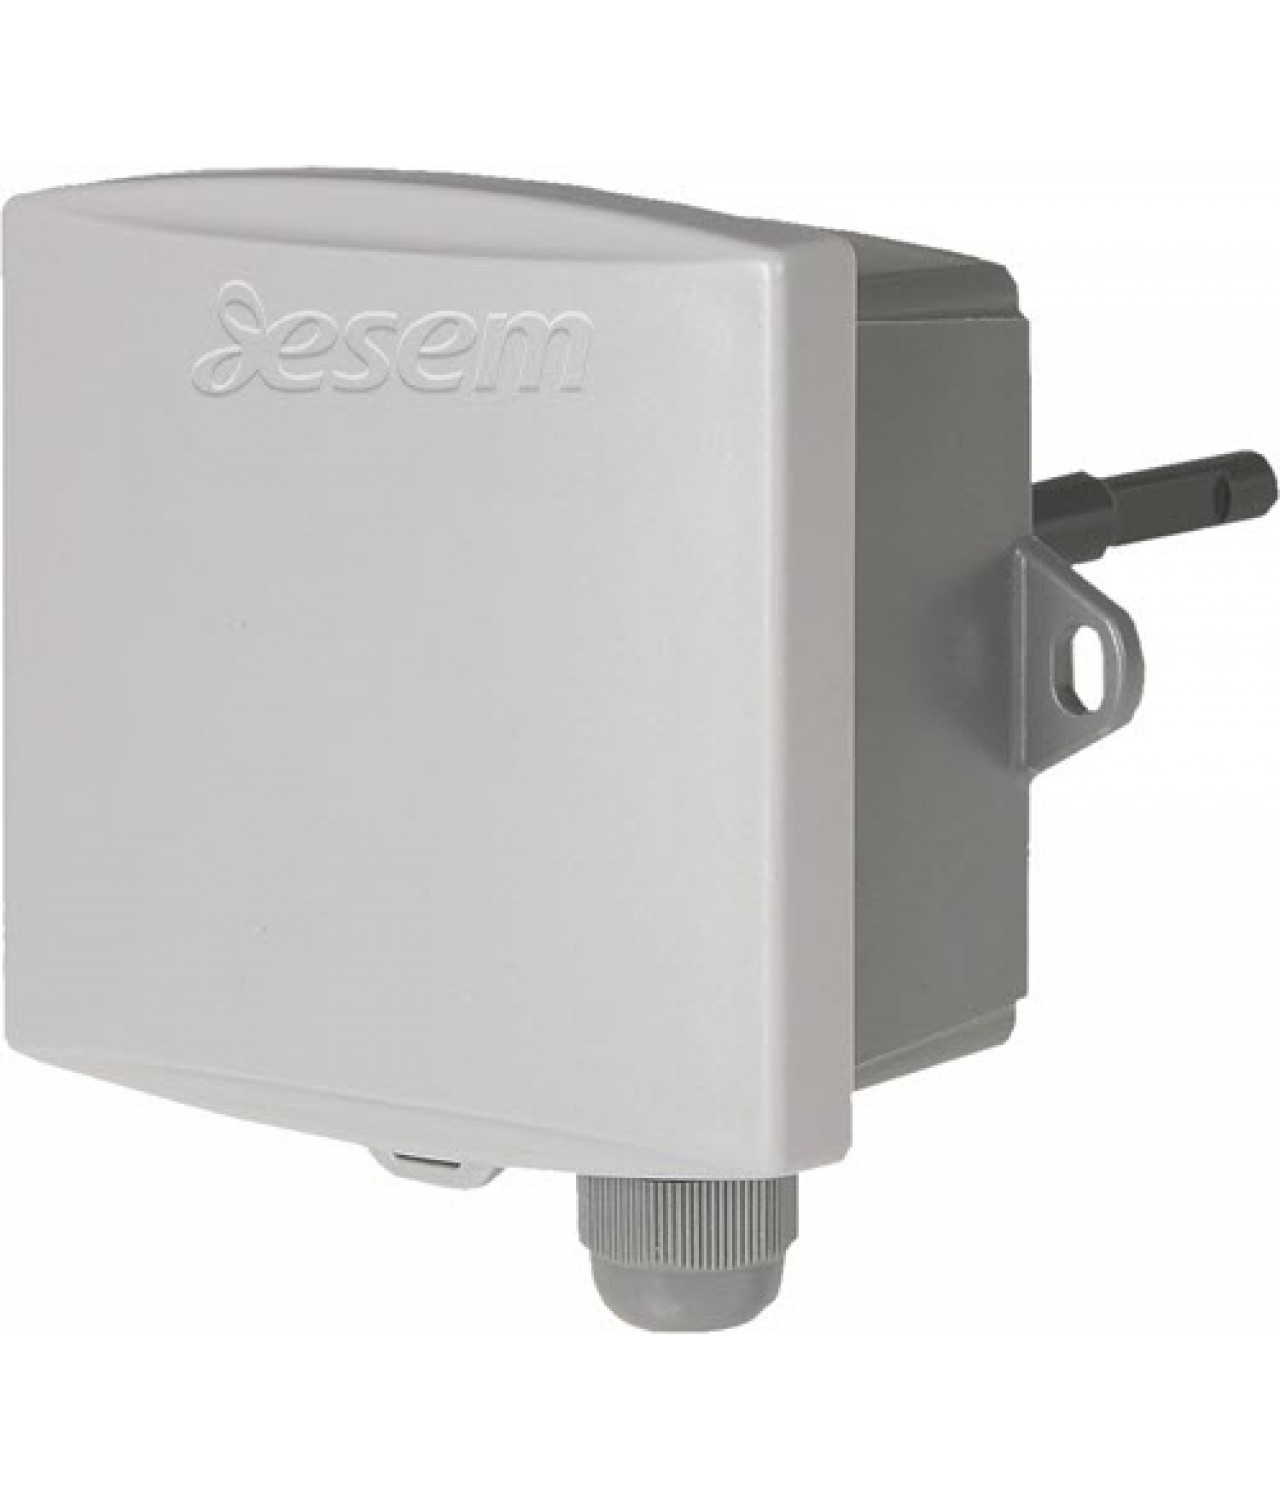 SCD - room CO2 and temperature sensor